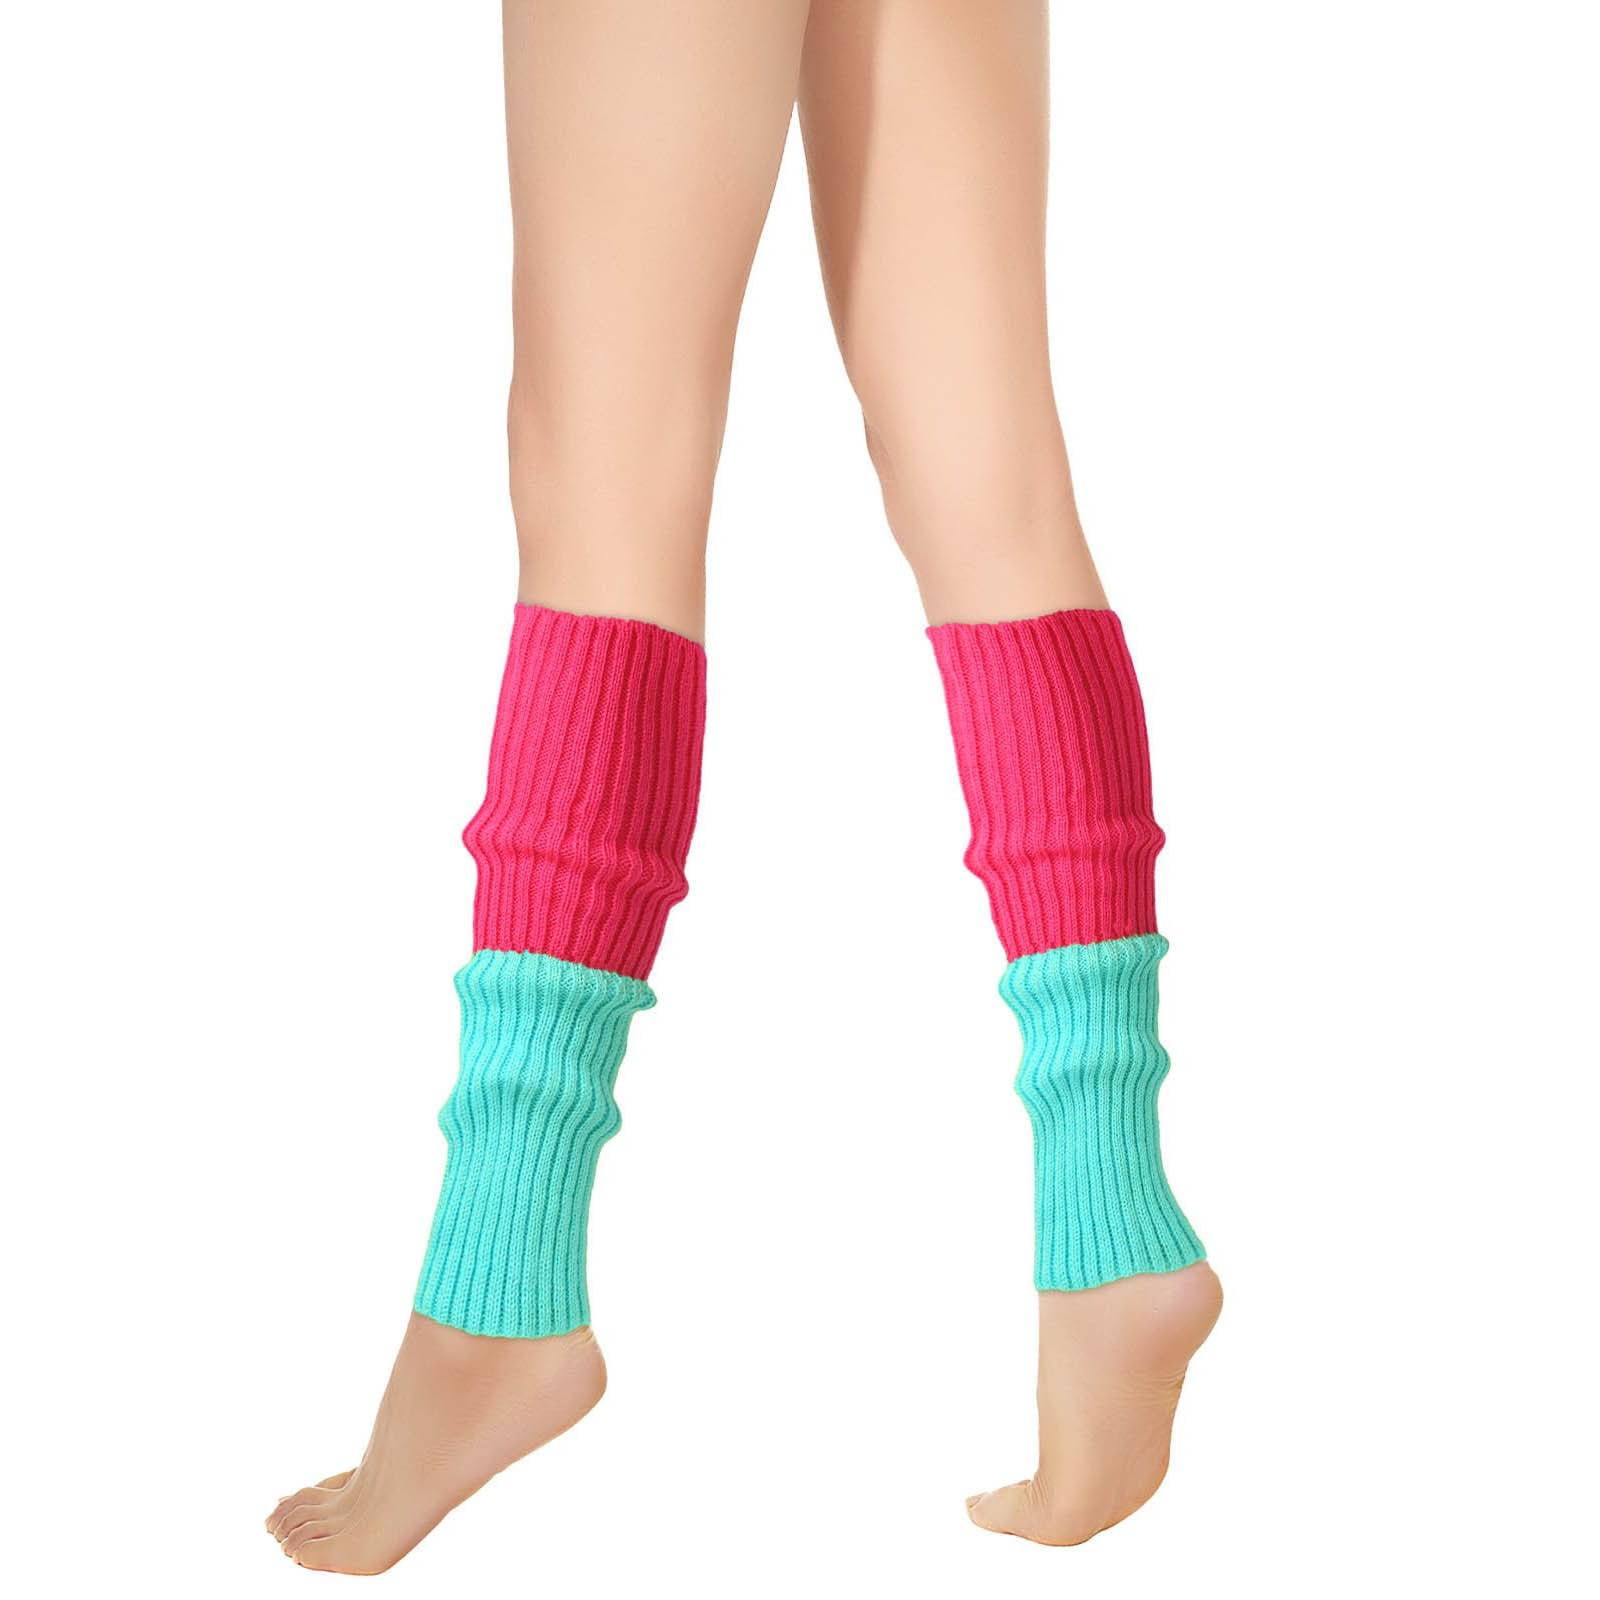 Leg Warmers for Women 80s Accessories Stylish Neon Socks